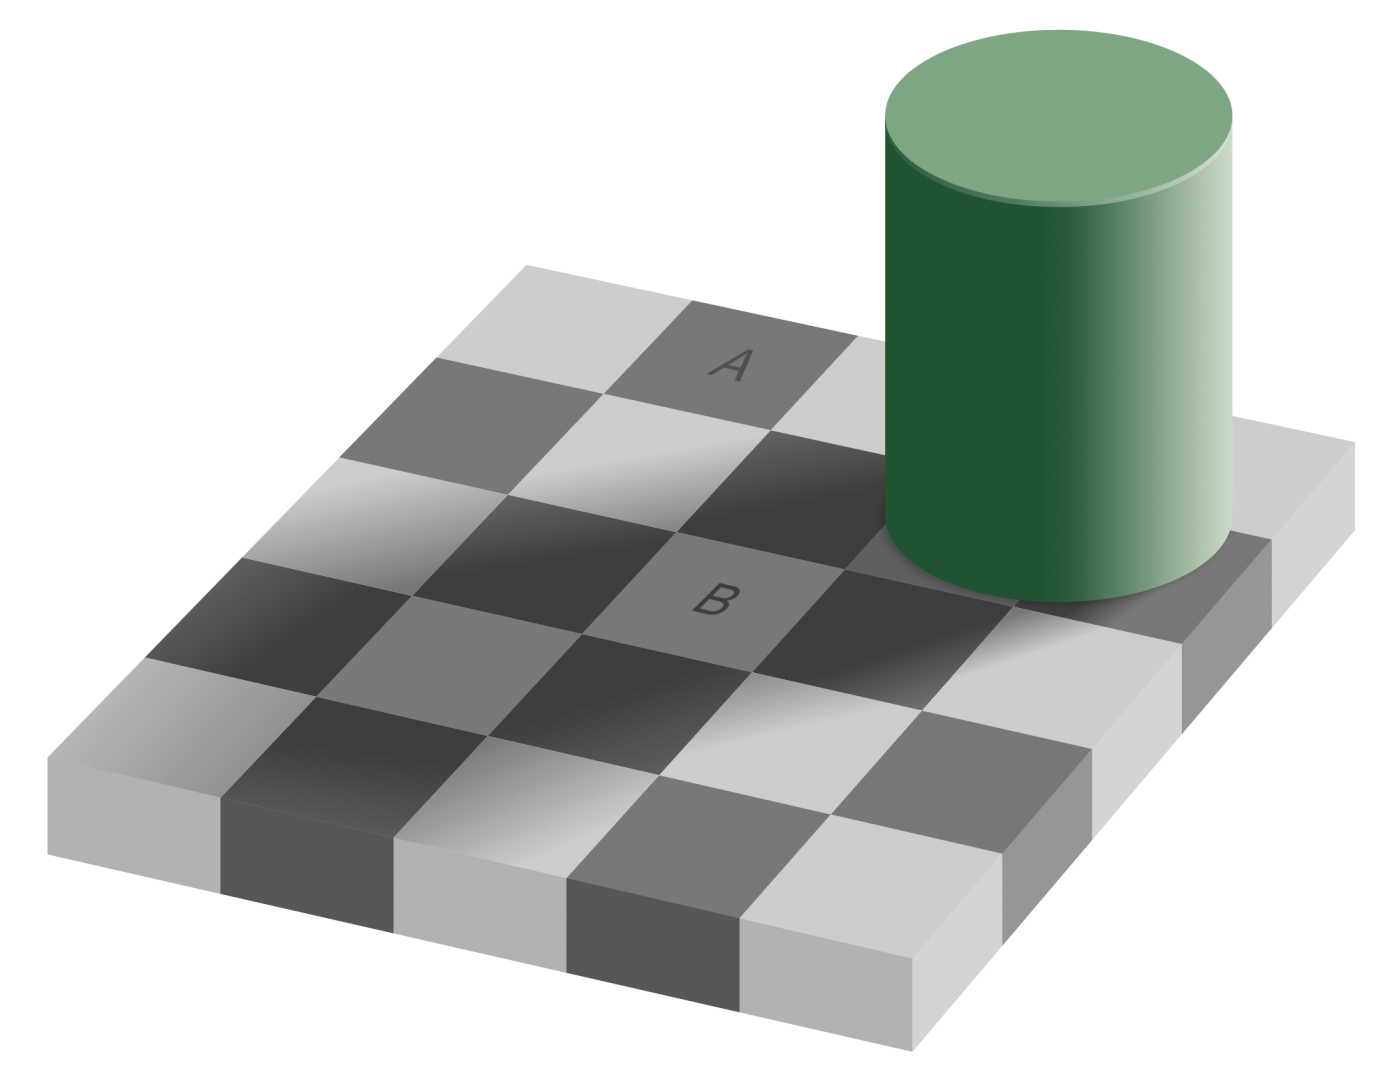 2000px-Grey_square_optical_illusion_svg.thumb.png.879f90069e48500c79c486ac1d198c2c.png